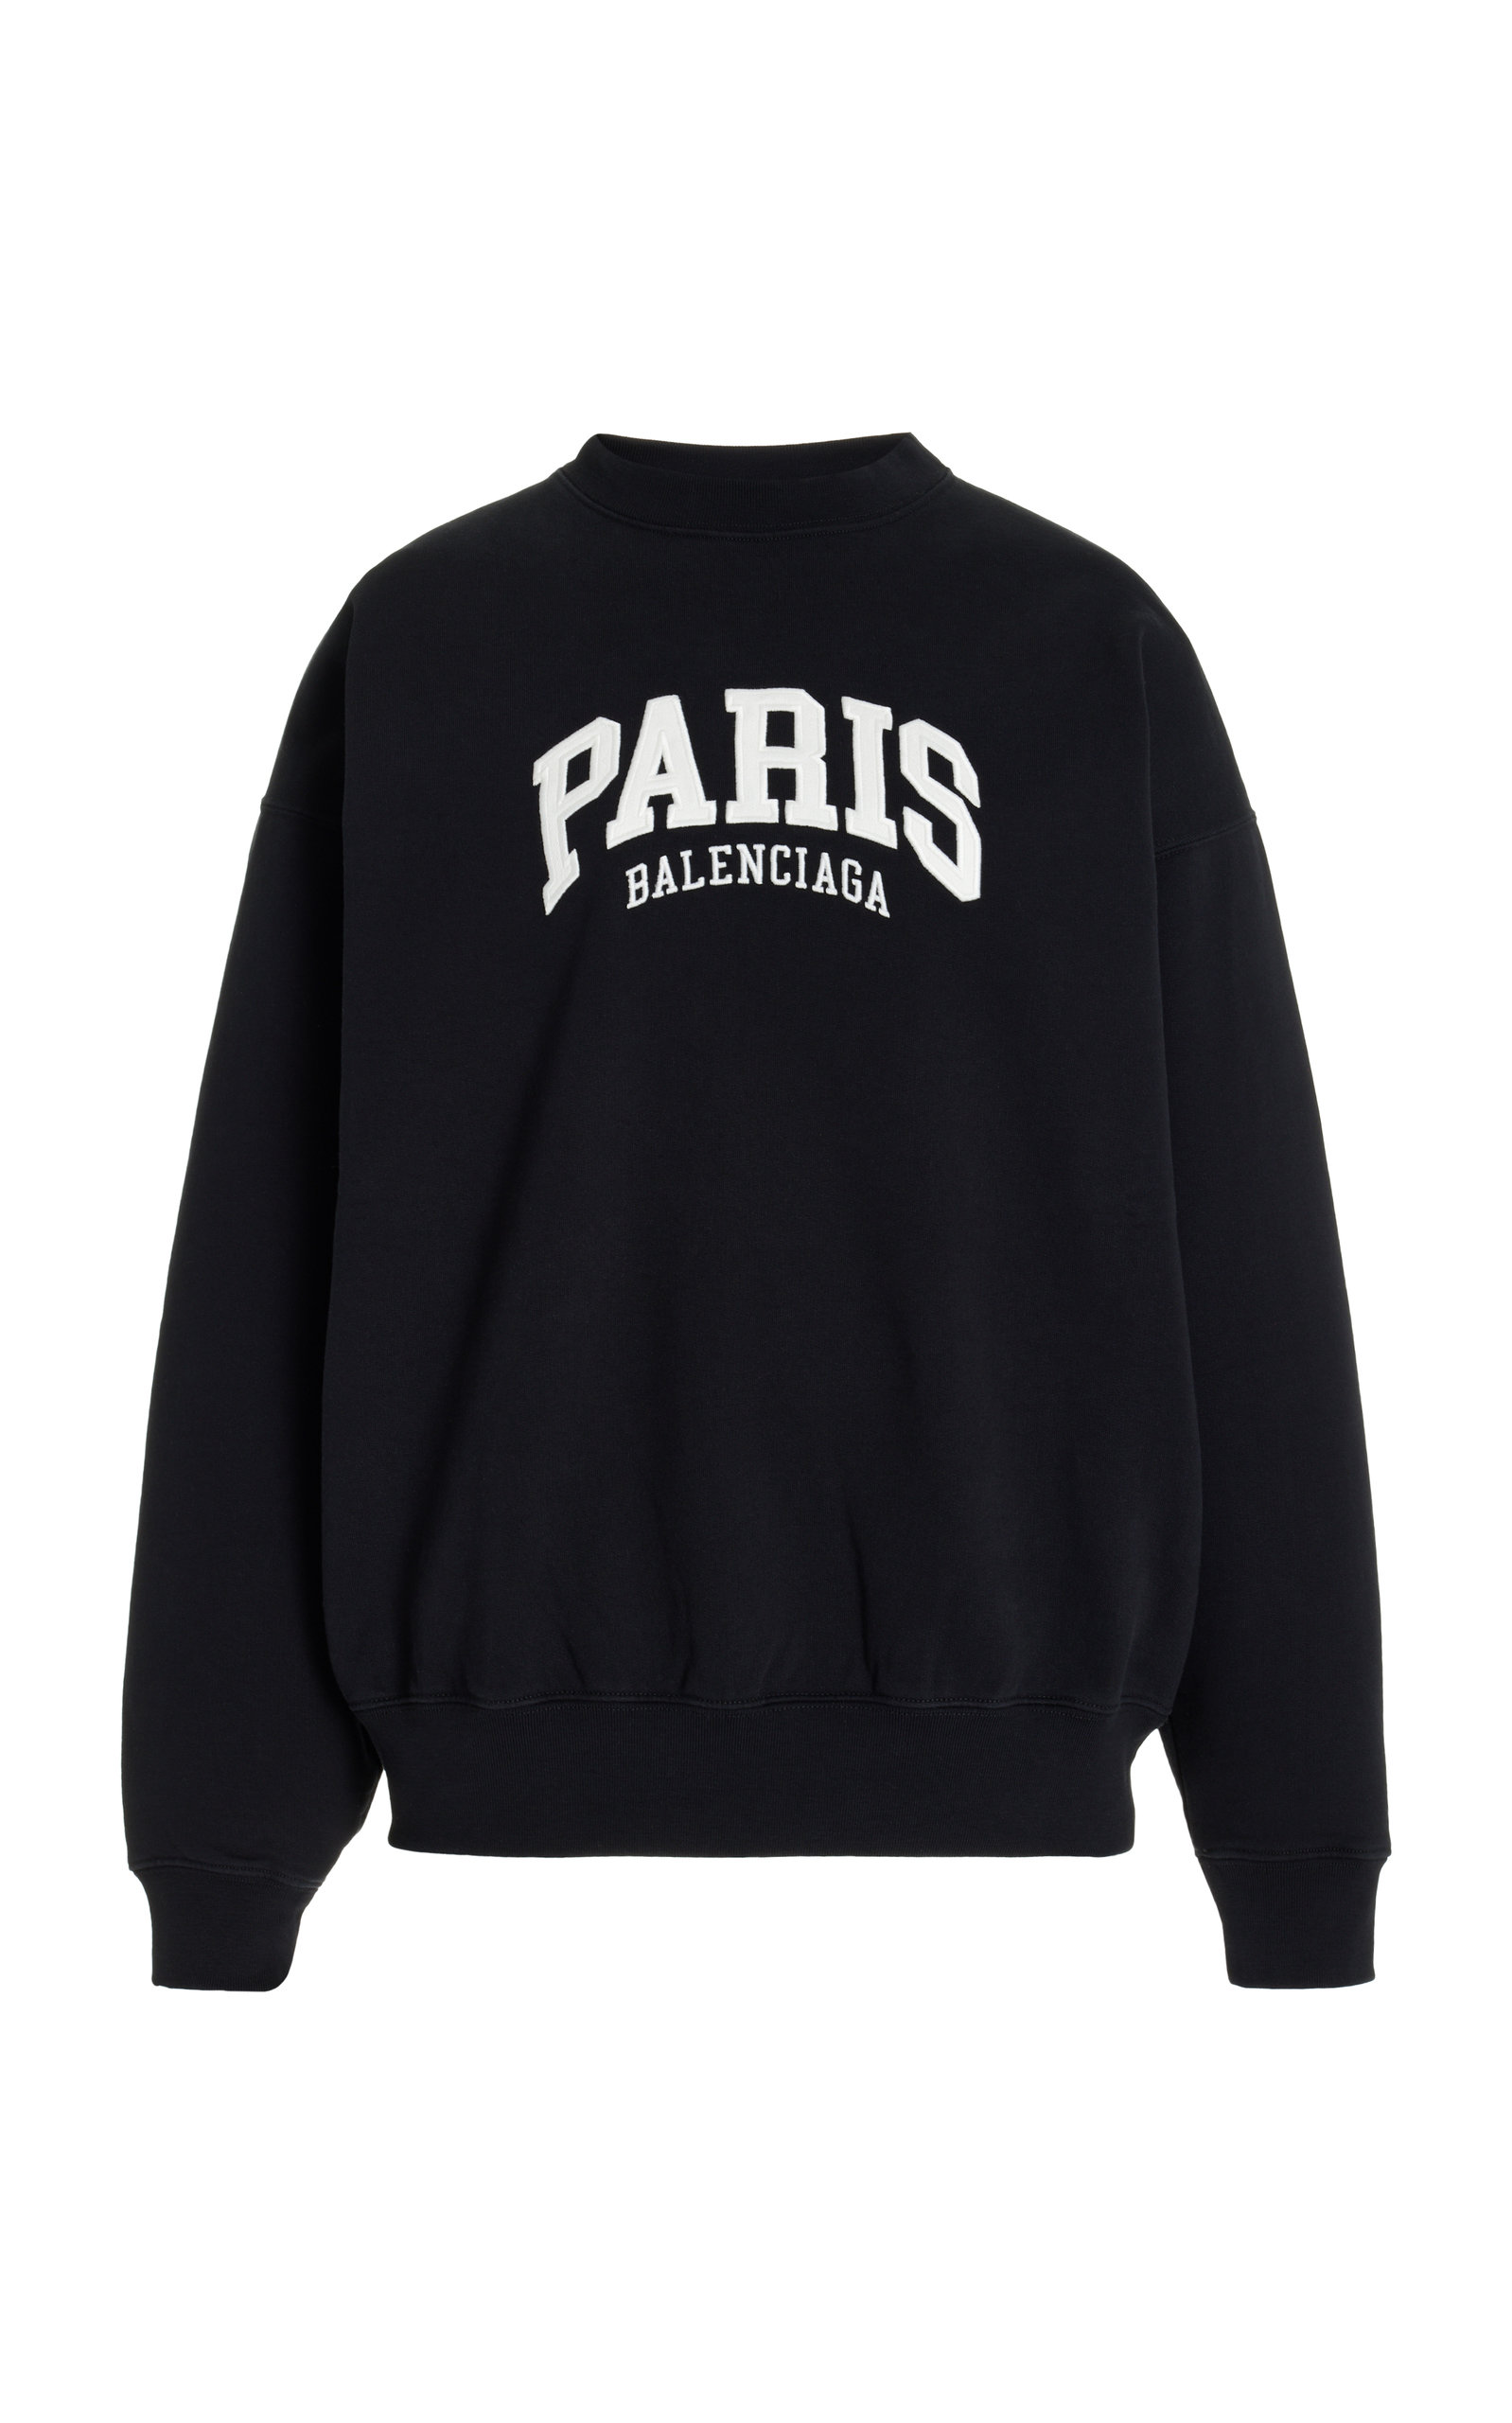 Balenciaga Women's Paris Jersey Sweatshirt